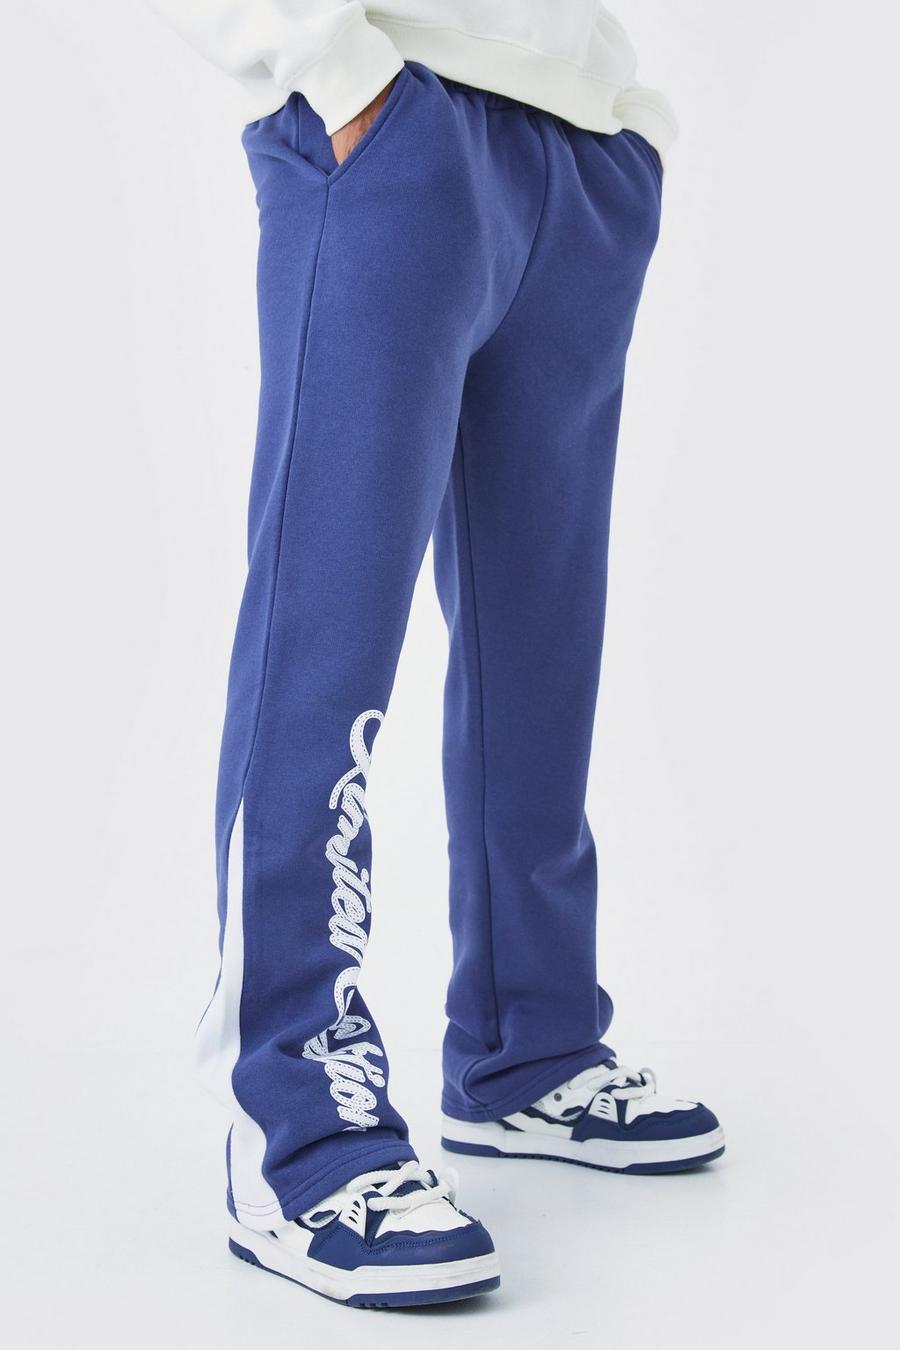 Pantalón deportivo Limited Edition con refuerzos, Slate blue